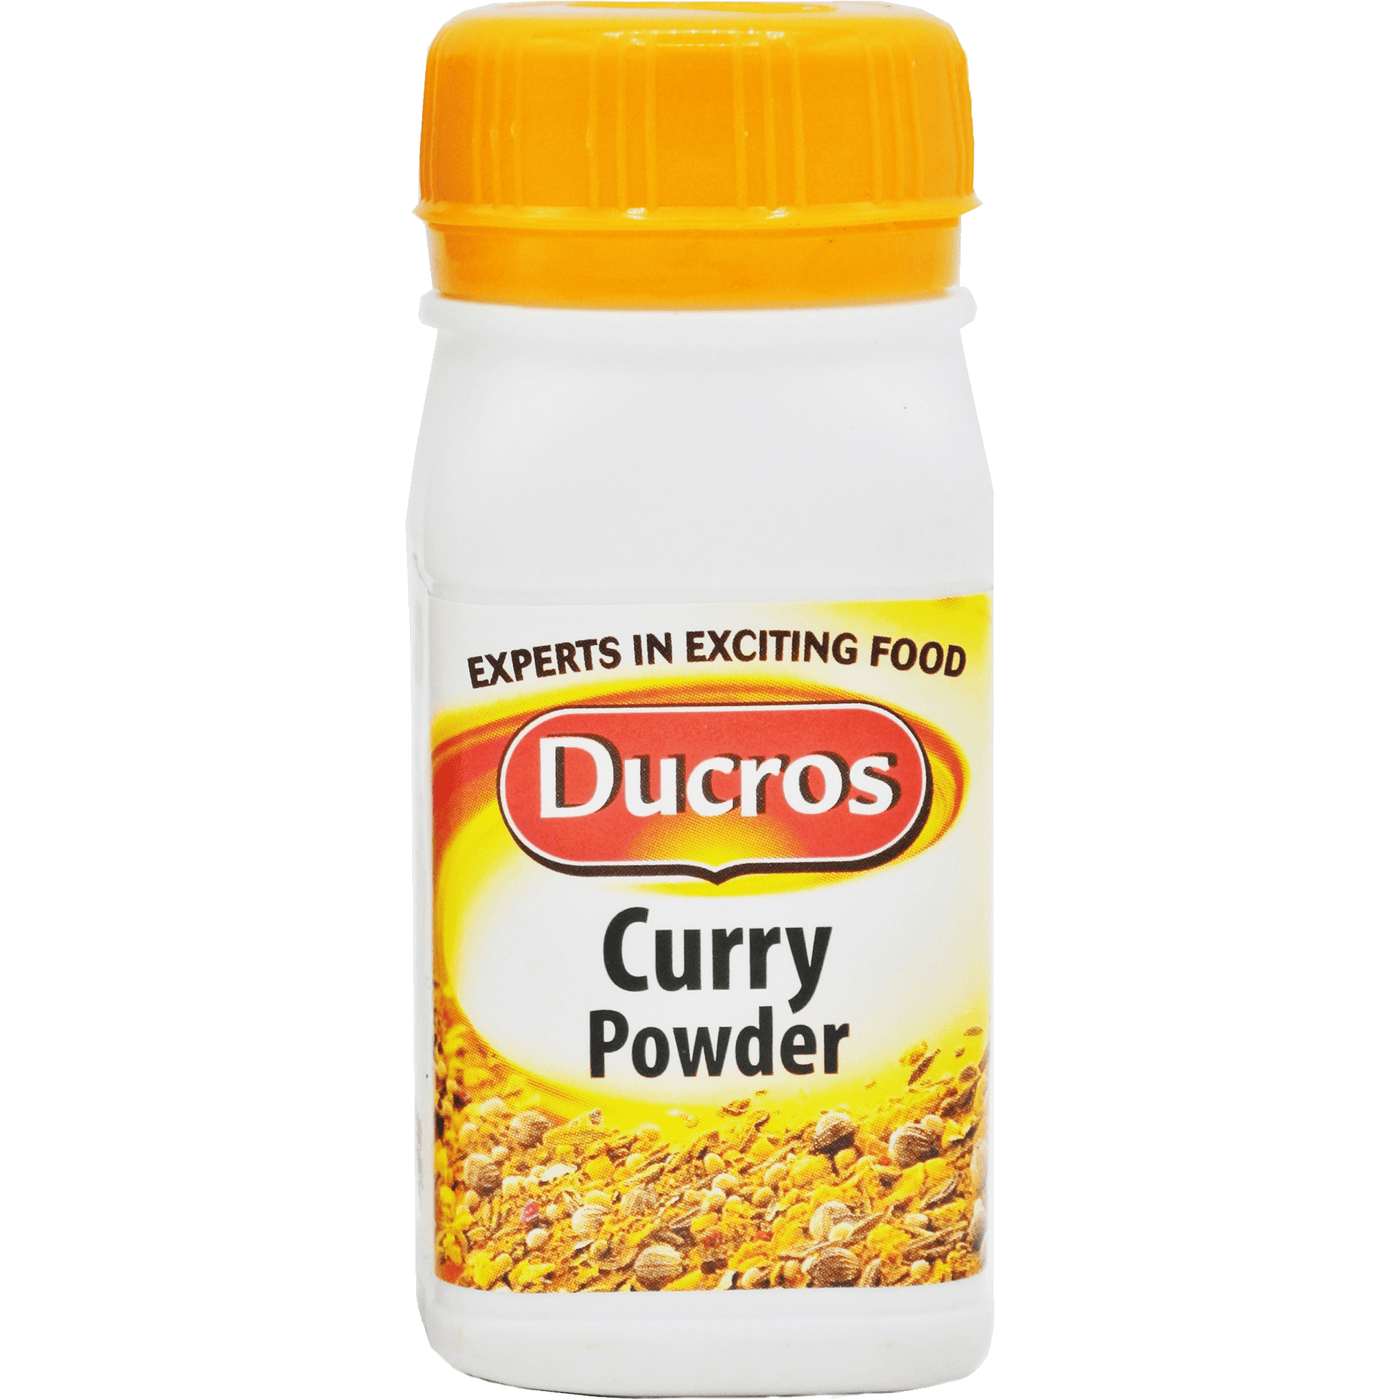 Ducros Dried Thyme 10g & Ducros Curry Powder 25g Bundle